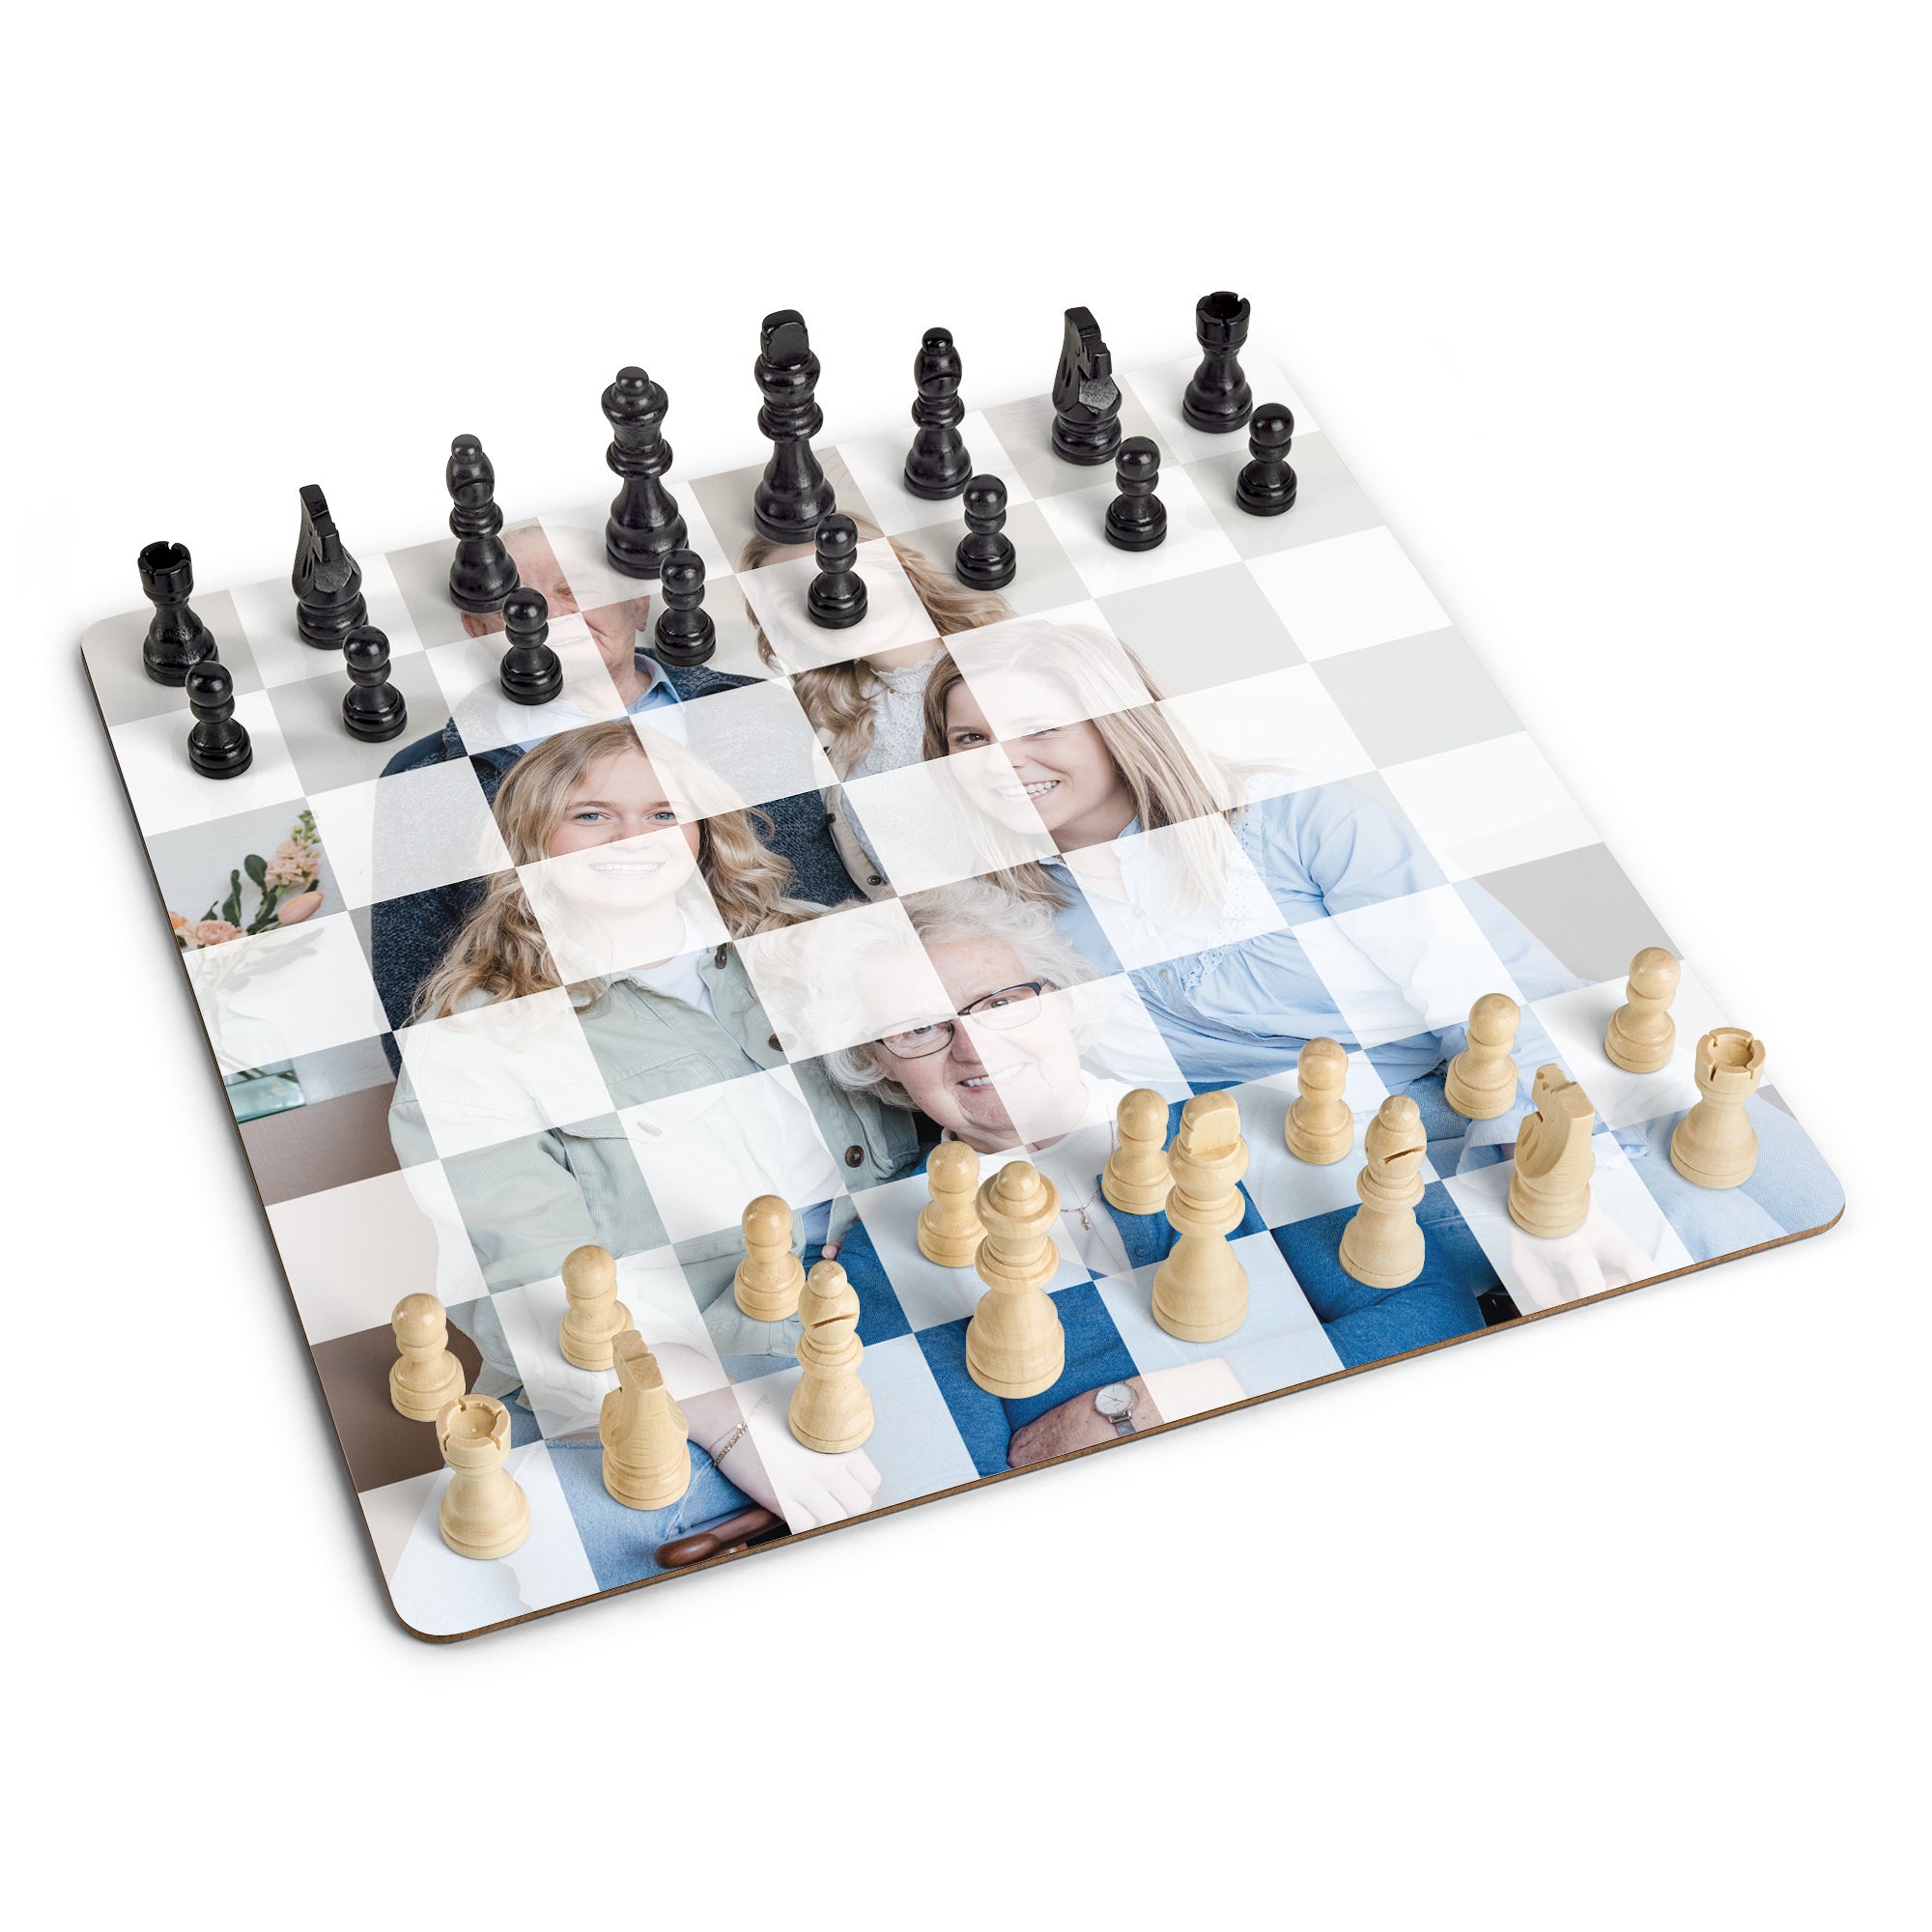 Individuellfotogeschenke - Persoalisiertes Brettspiel Schach - Onlineshop YourSurprise